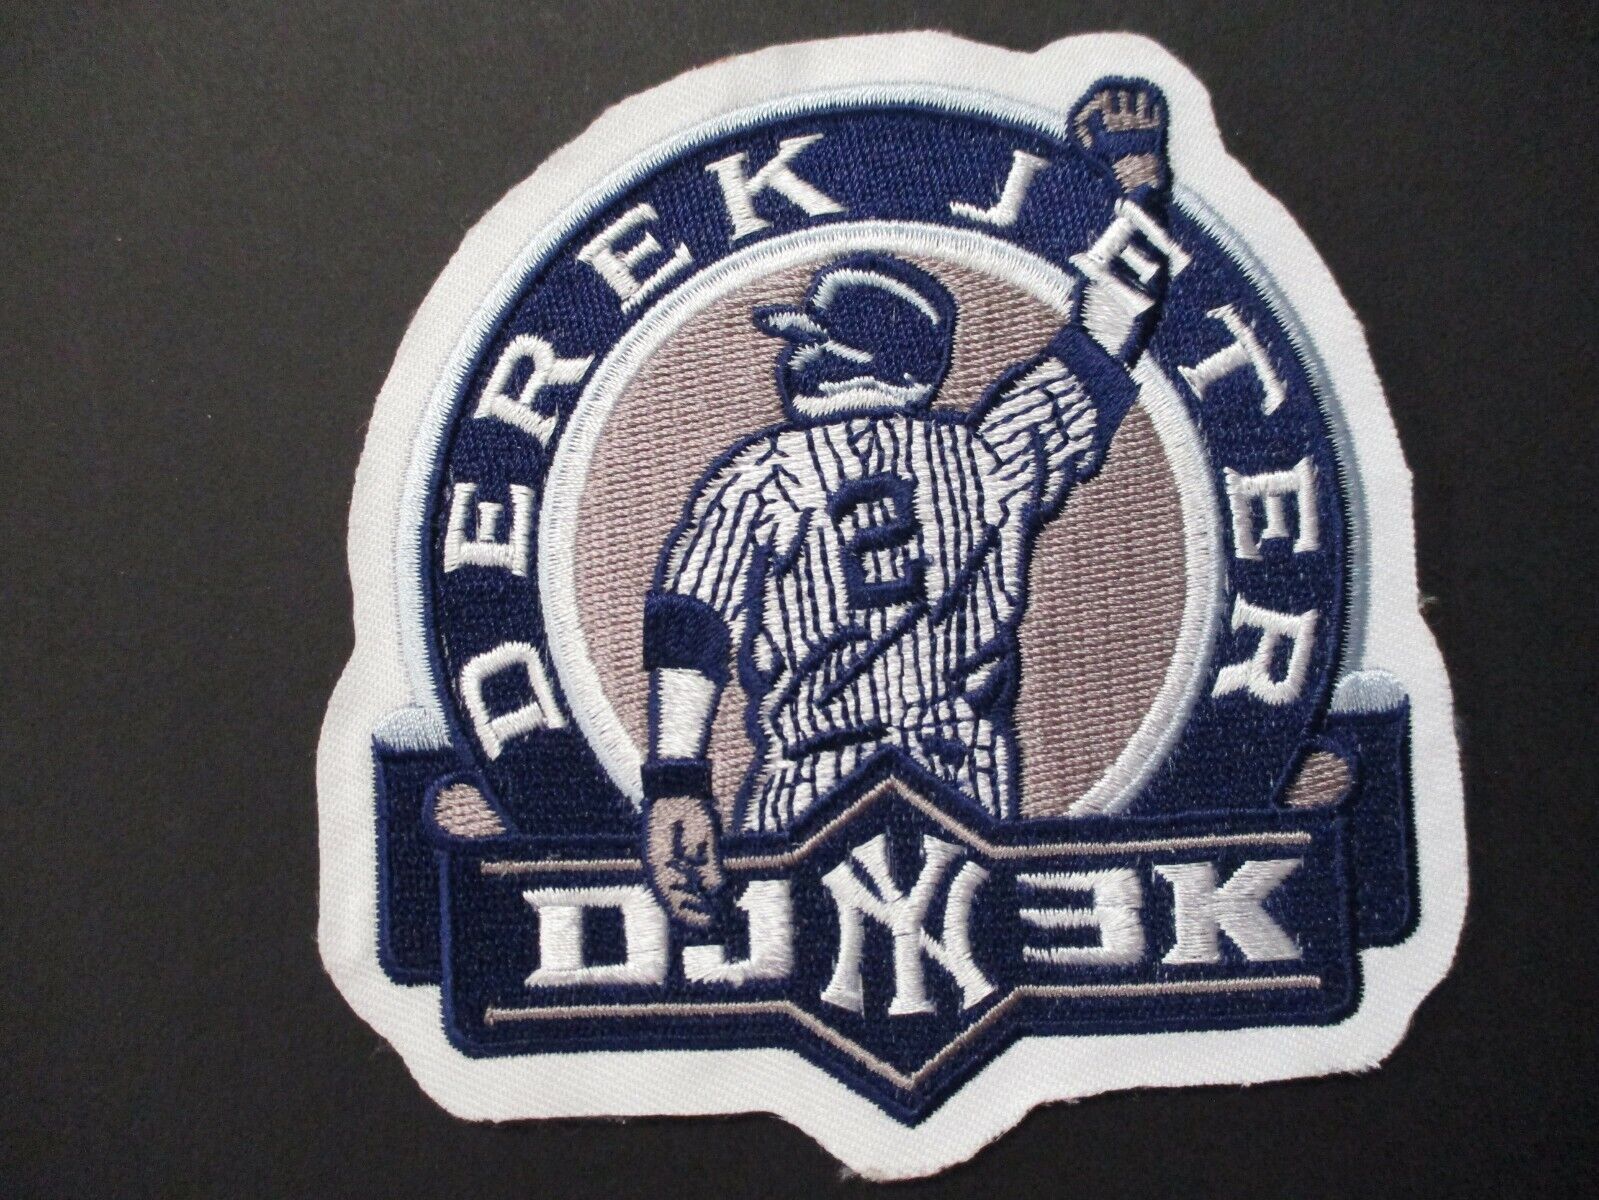 Derek Jeter New York NY Yankees MLB Baseball 3,000 Hit Patch Size 4 x 4 inches